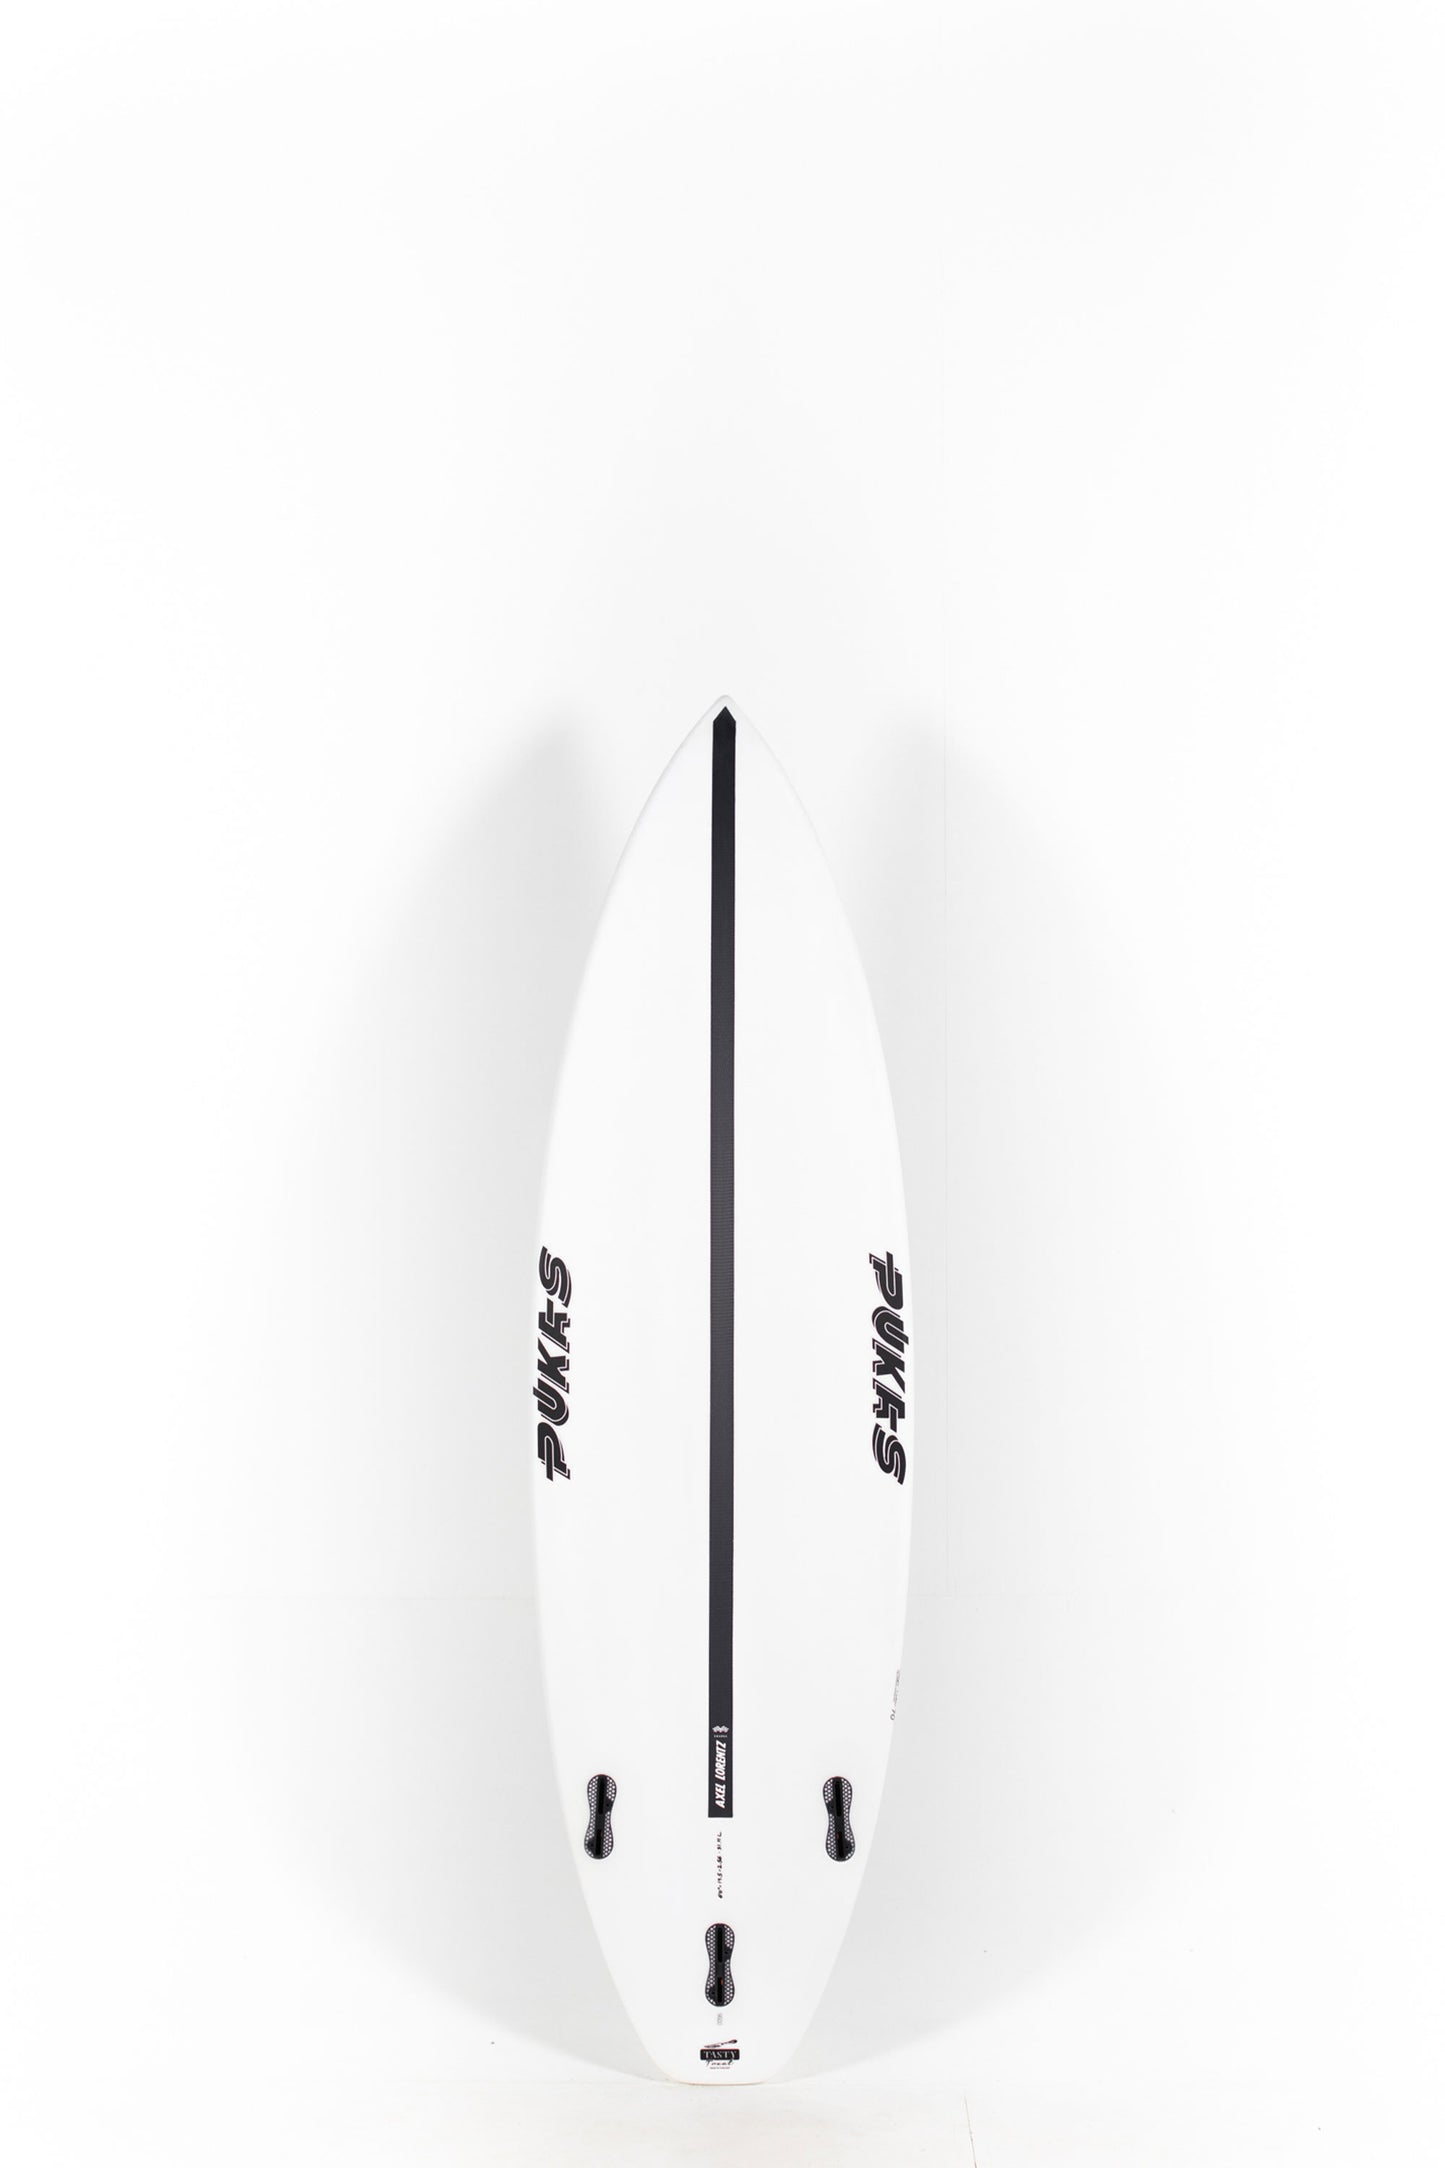 Pukas Surf Shop - Pukas Surfboard - INNCA Tech - TASTY TREAT by Axel Lorentz- 6’0” x 19,5 x 2,56 x 31,71L